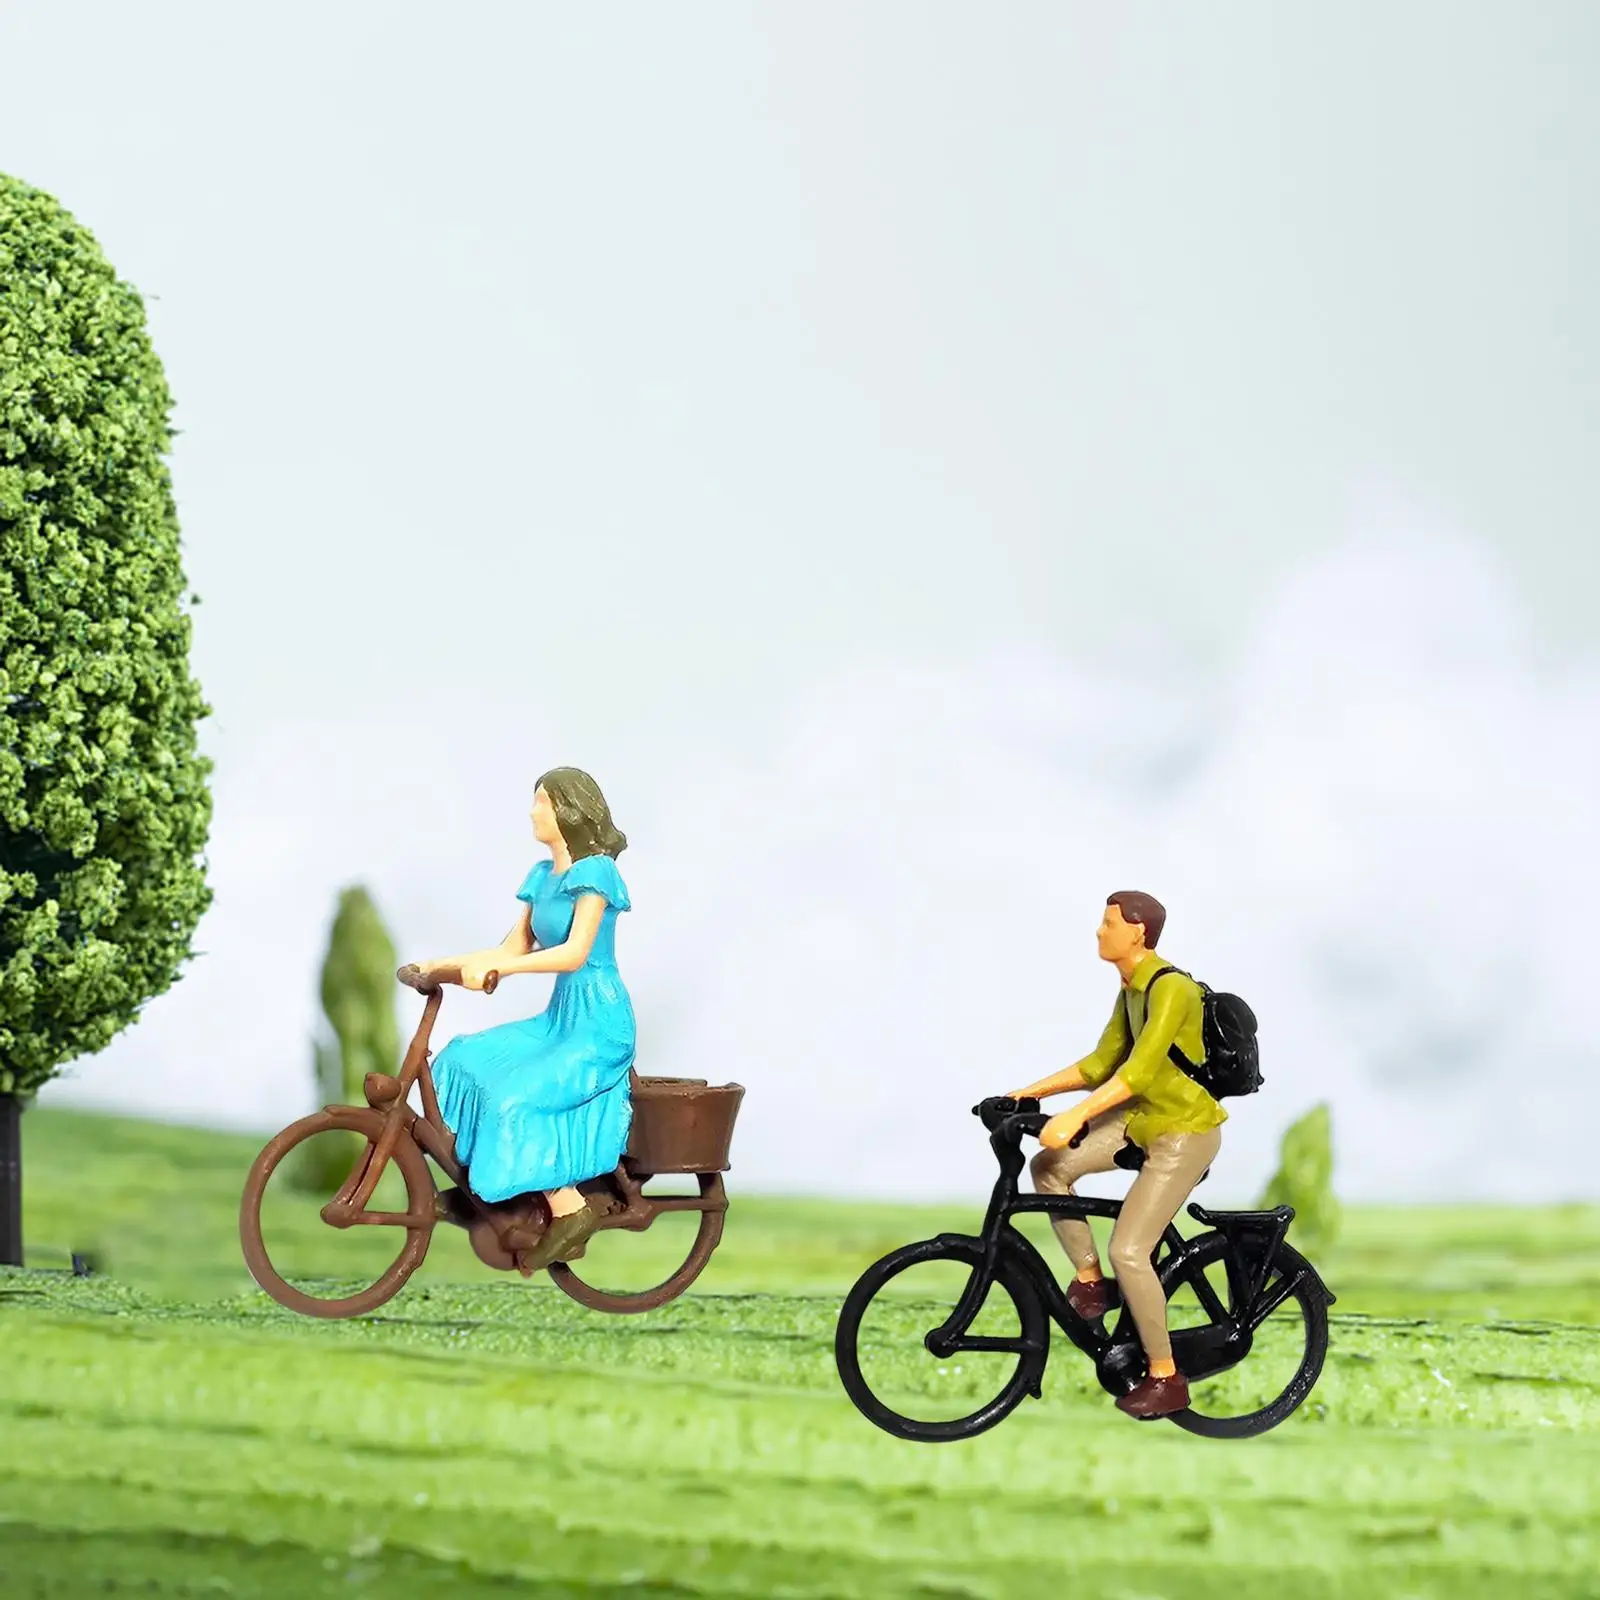 1/87 Scale Cyclist Figurine Mini People Model for DIY Scene Dollhouse Layout